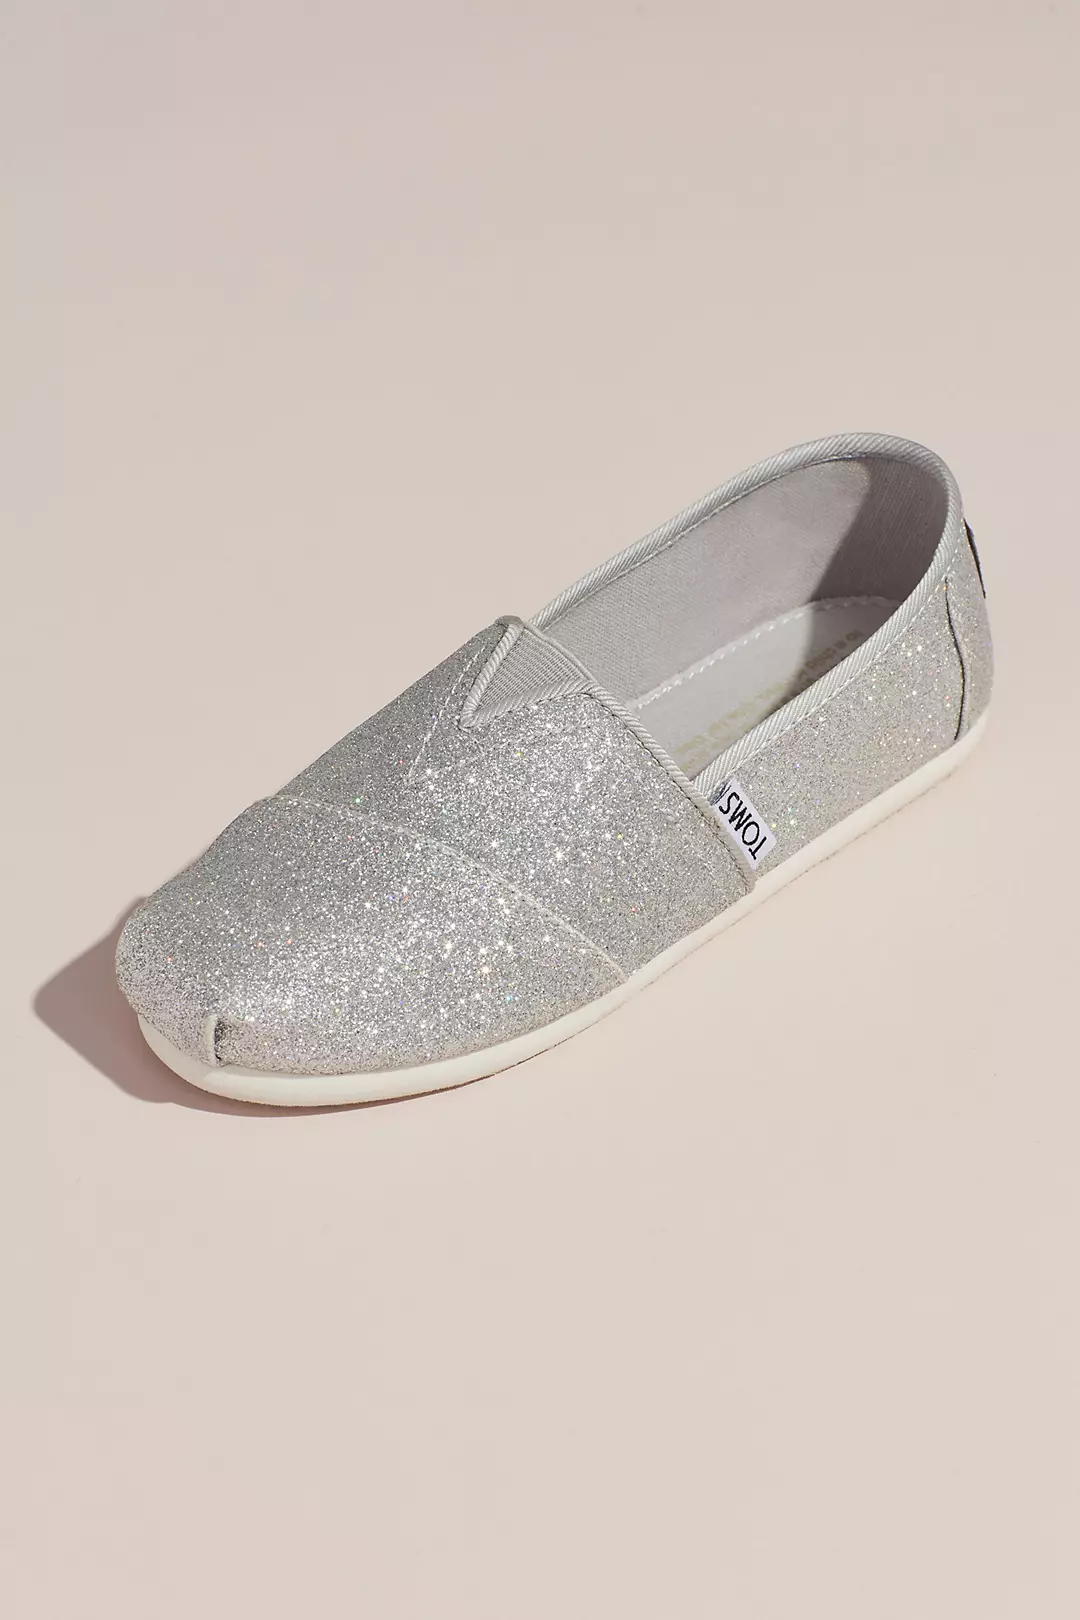 TOMS Girls Glitter Classic Slip-On Shoes Image